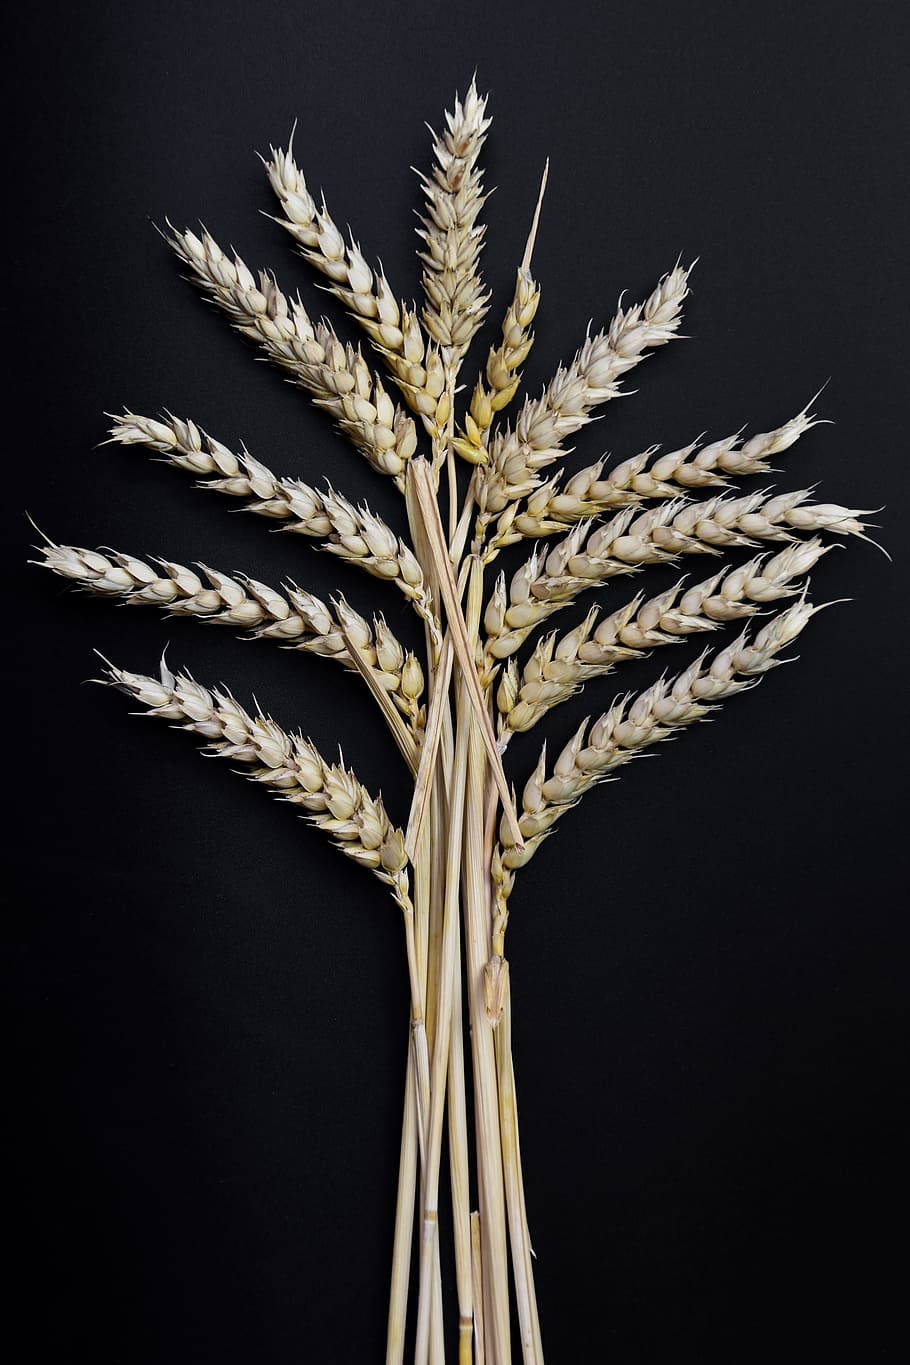 ear, grain, corn on the cob, wheat, klasky, studio shot, close-up, plant, indoors, black background